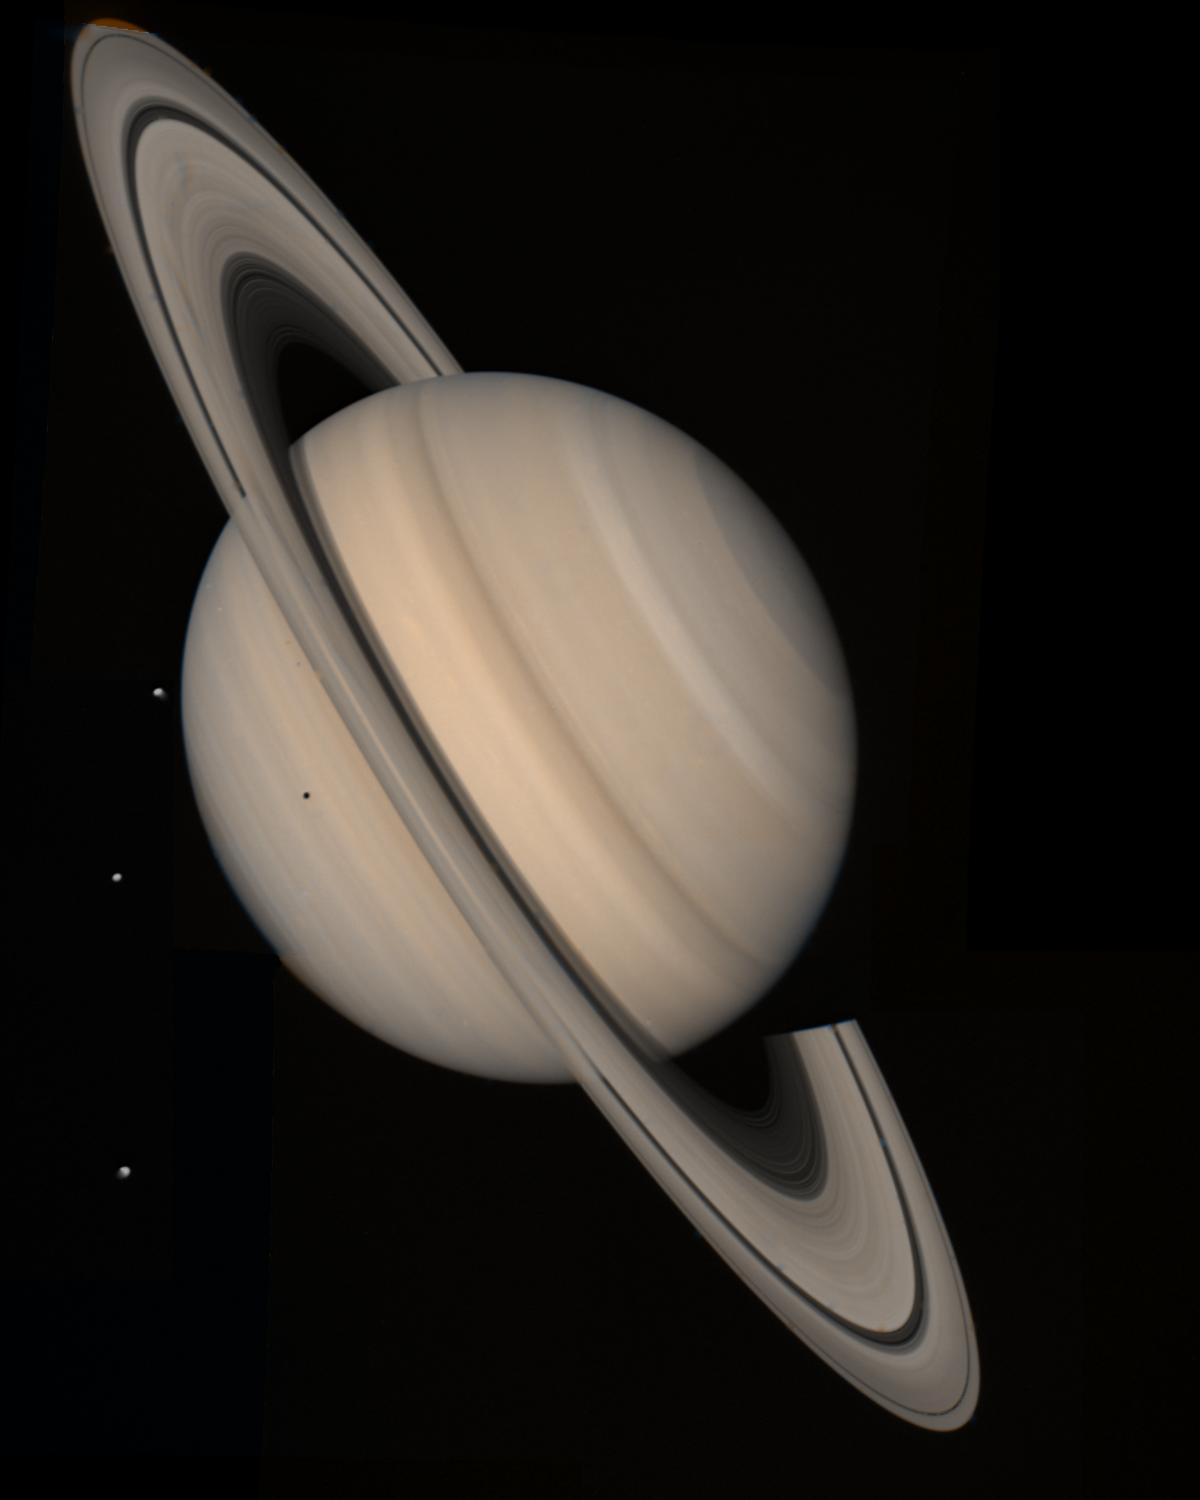 Saturne photo nasa